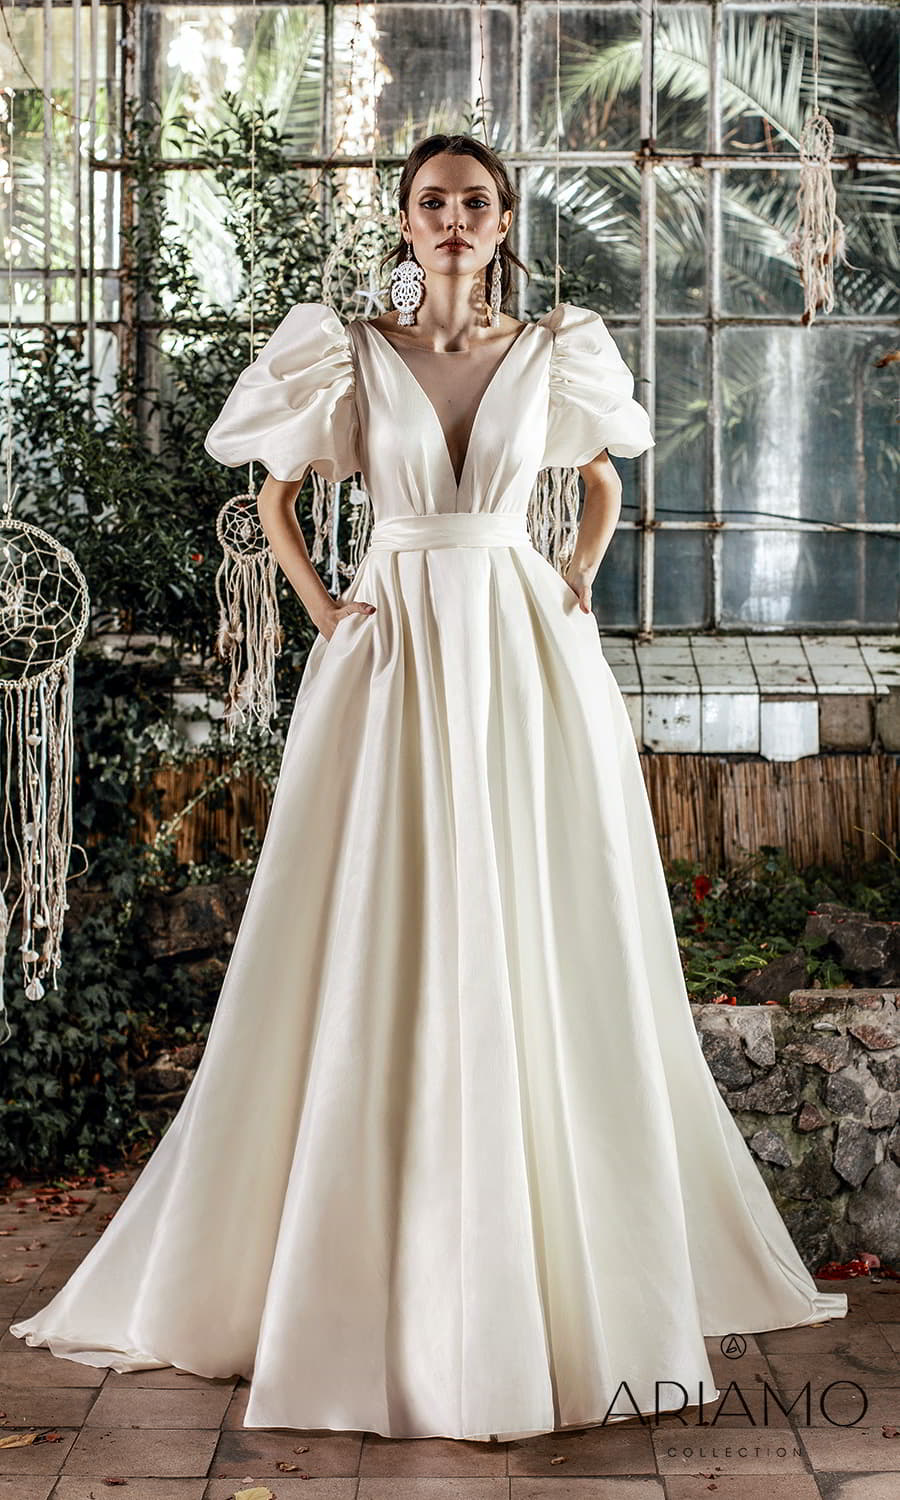 ariamo 2022 bridal short puff sleeve plunging v neckline clean minimalist a line ball gown wedding dress chapel train pocket bow back (samantha) mv